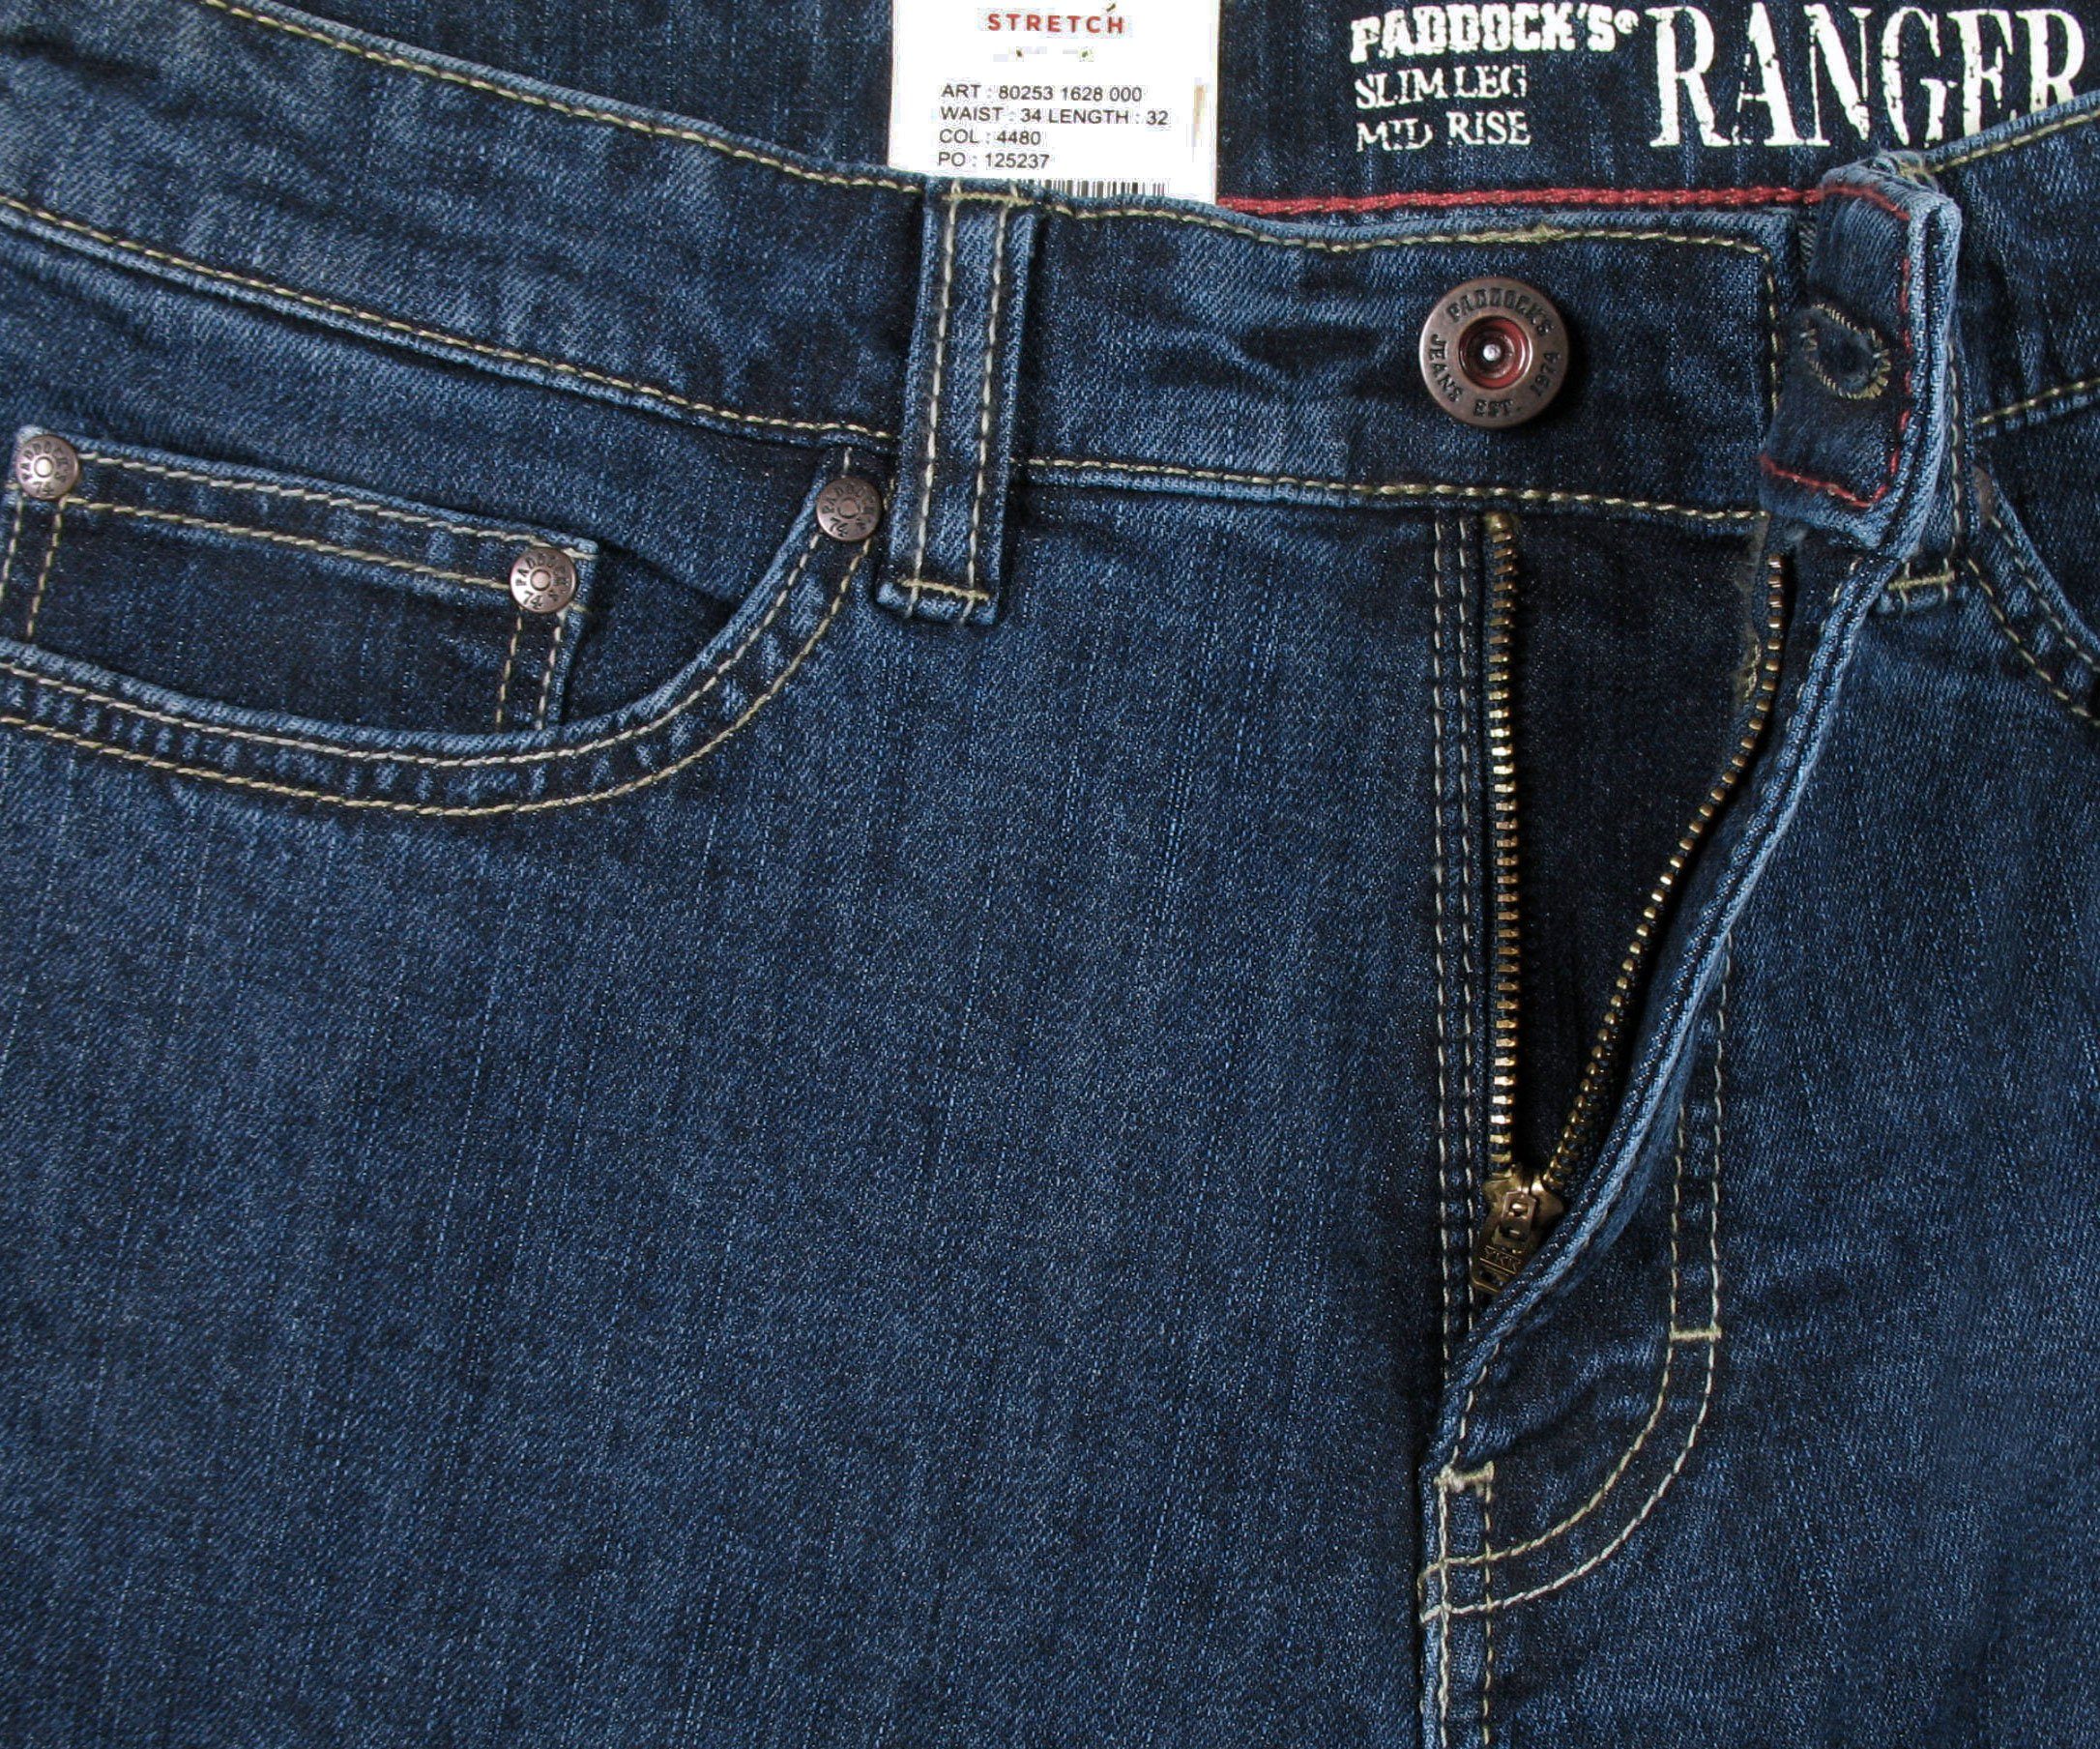 Ranger 5-Pocket-Jeans Denim Paddock's stone Stretch blue Ospig 4480 dark